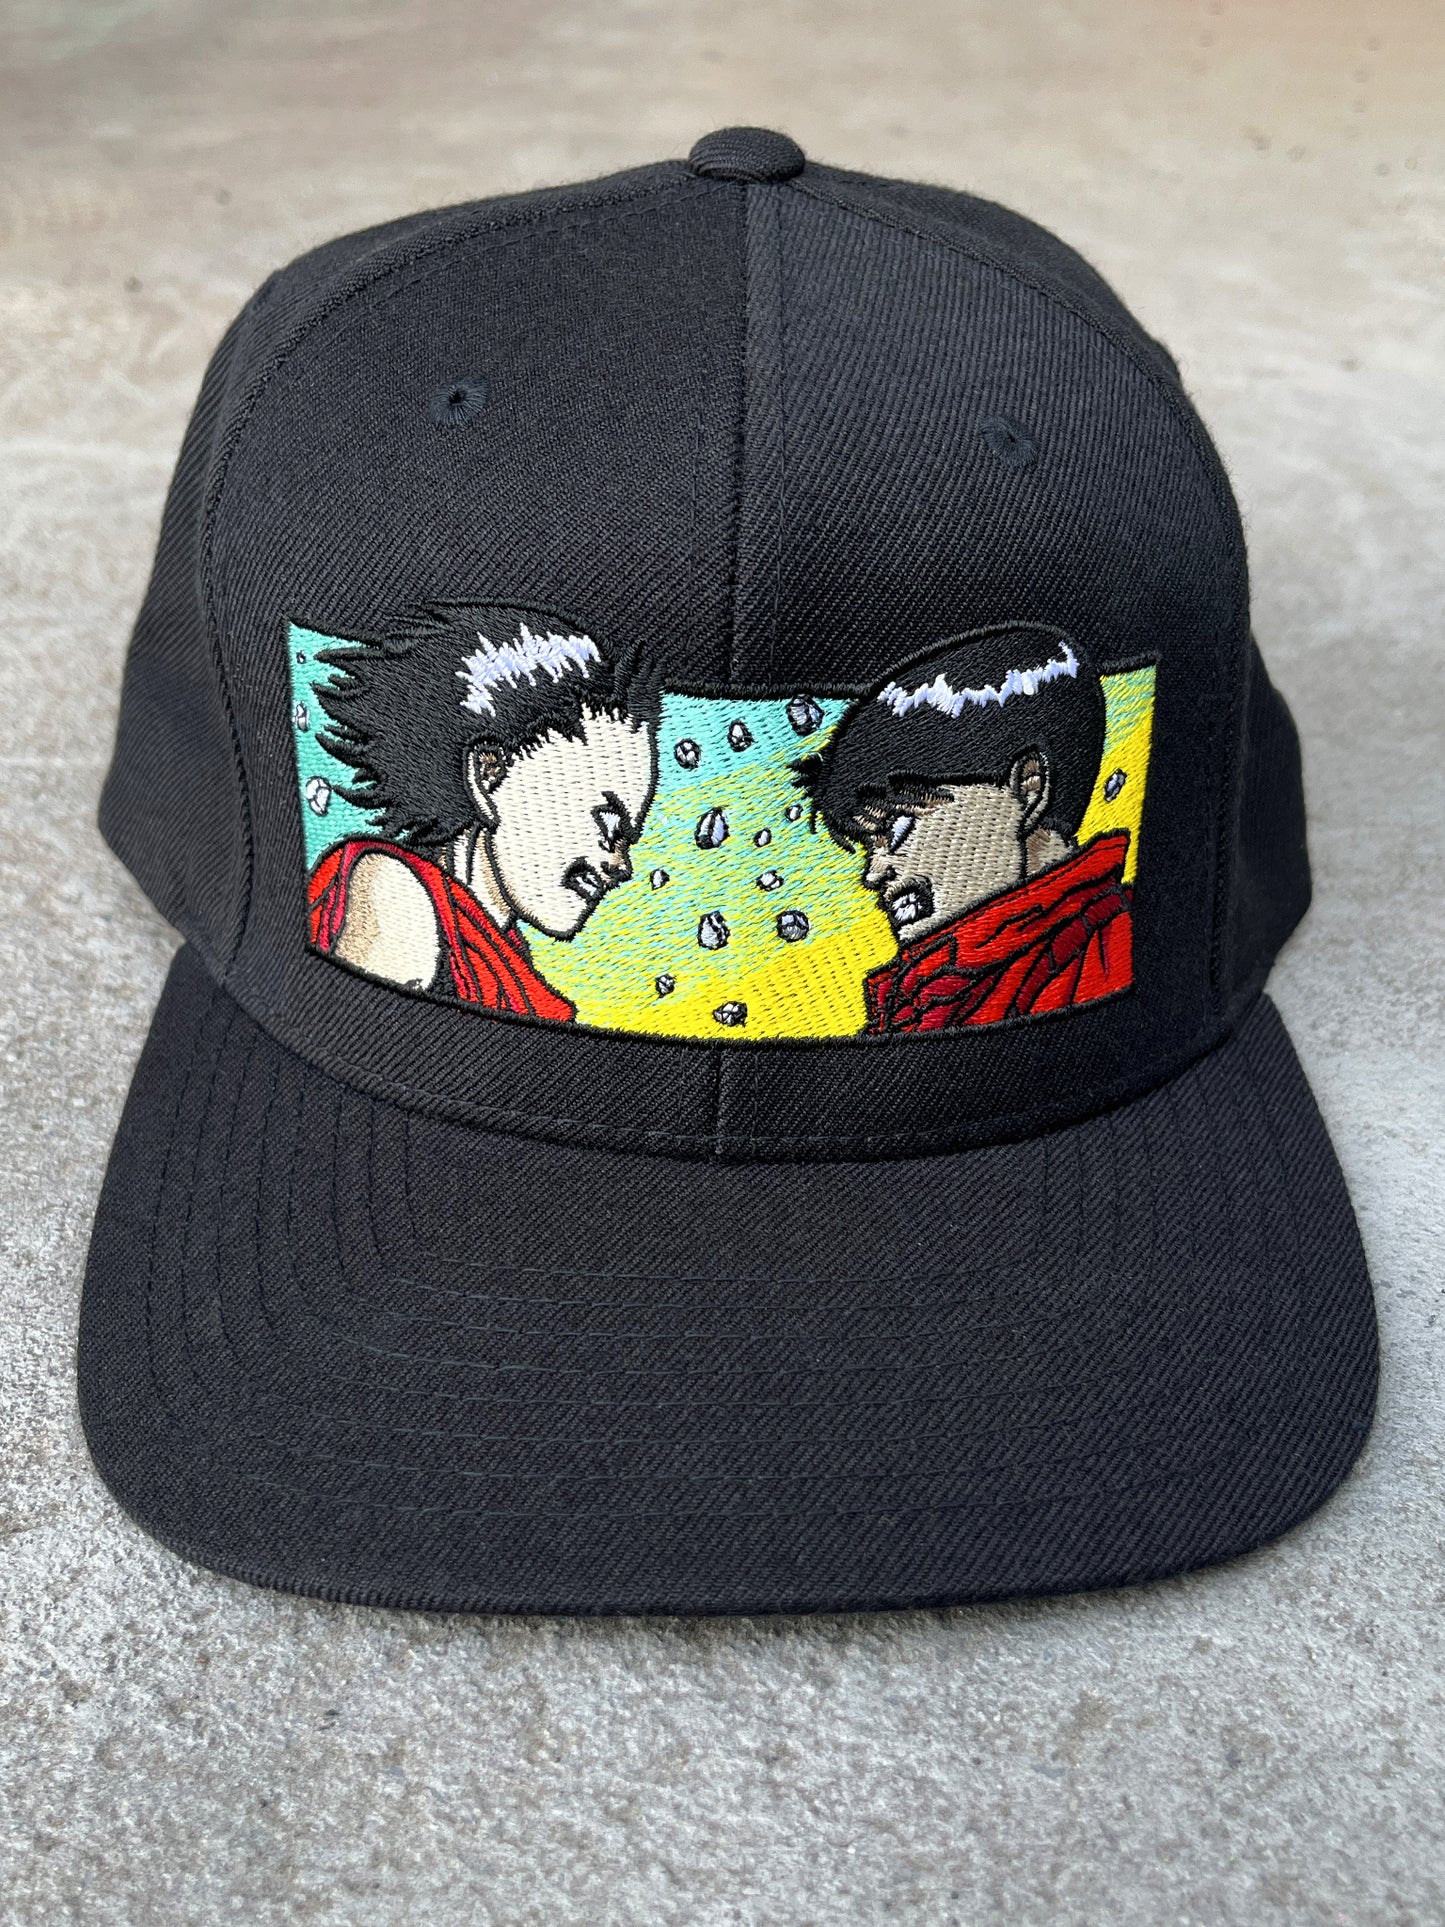 tetsuo vs kaneda embroidered snapback hat - BLACK